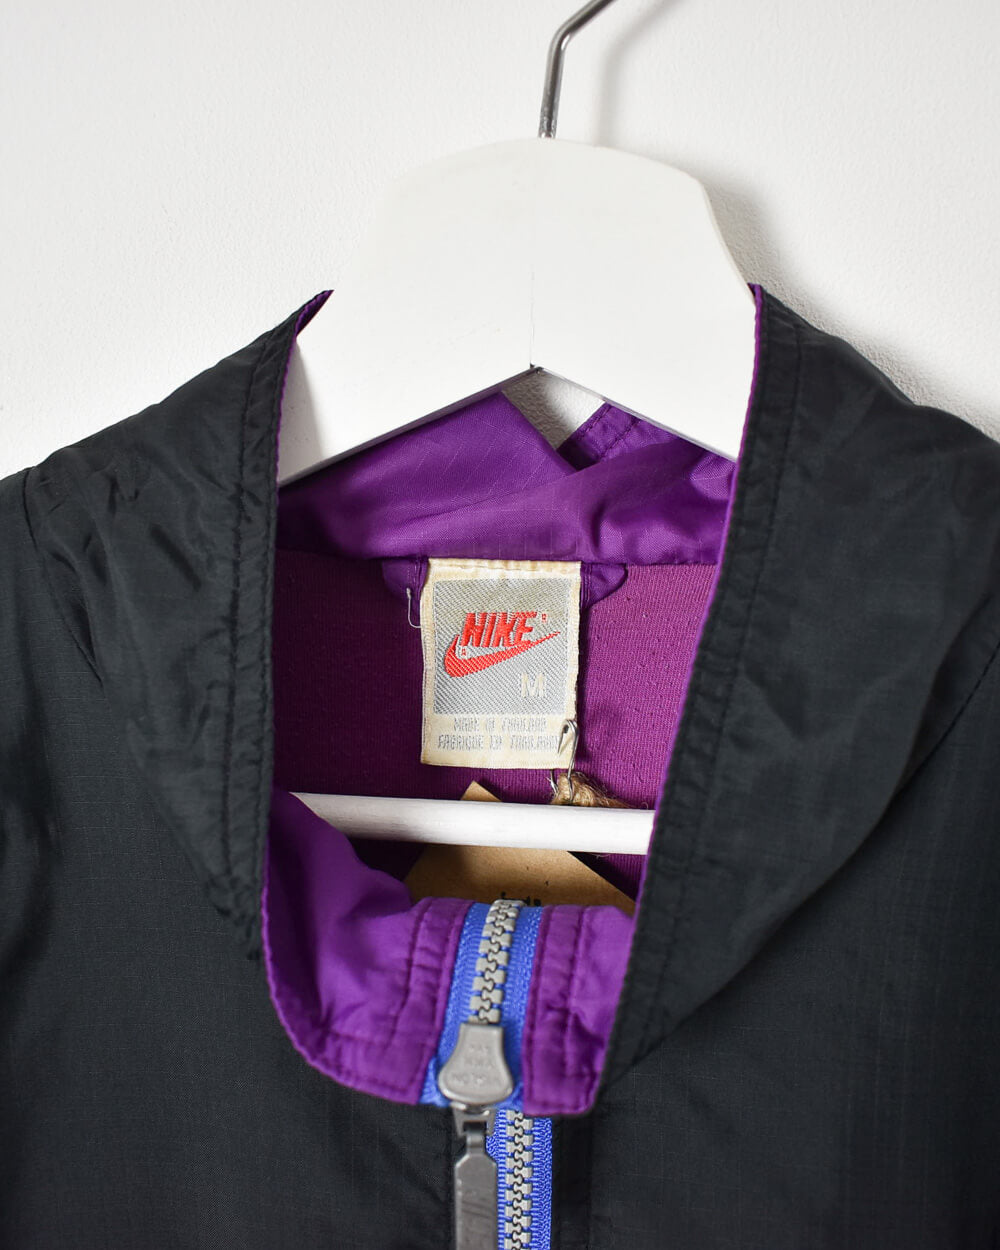 Nike Windbreaker Jacket - Medium - Domno Vintage 90s, 80s, 00s Retro and Vintage Clothing 